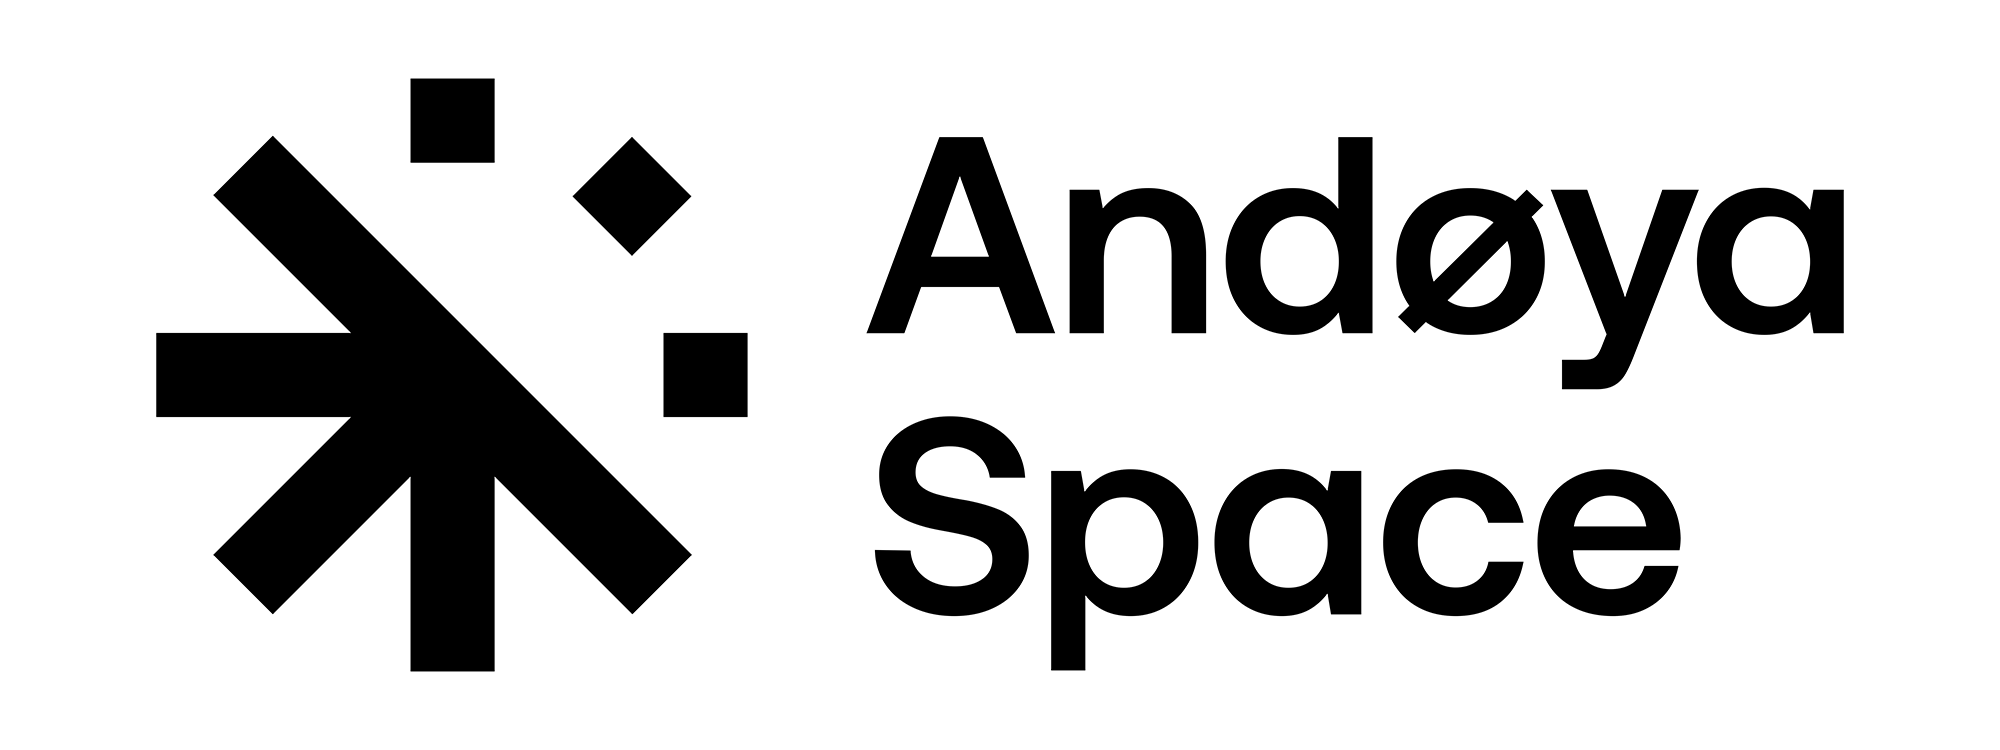 Andoya-Space-Logo-2k-nero-trasparente2